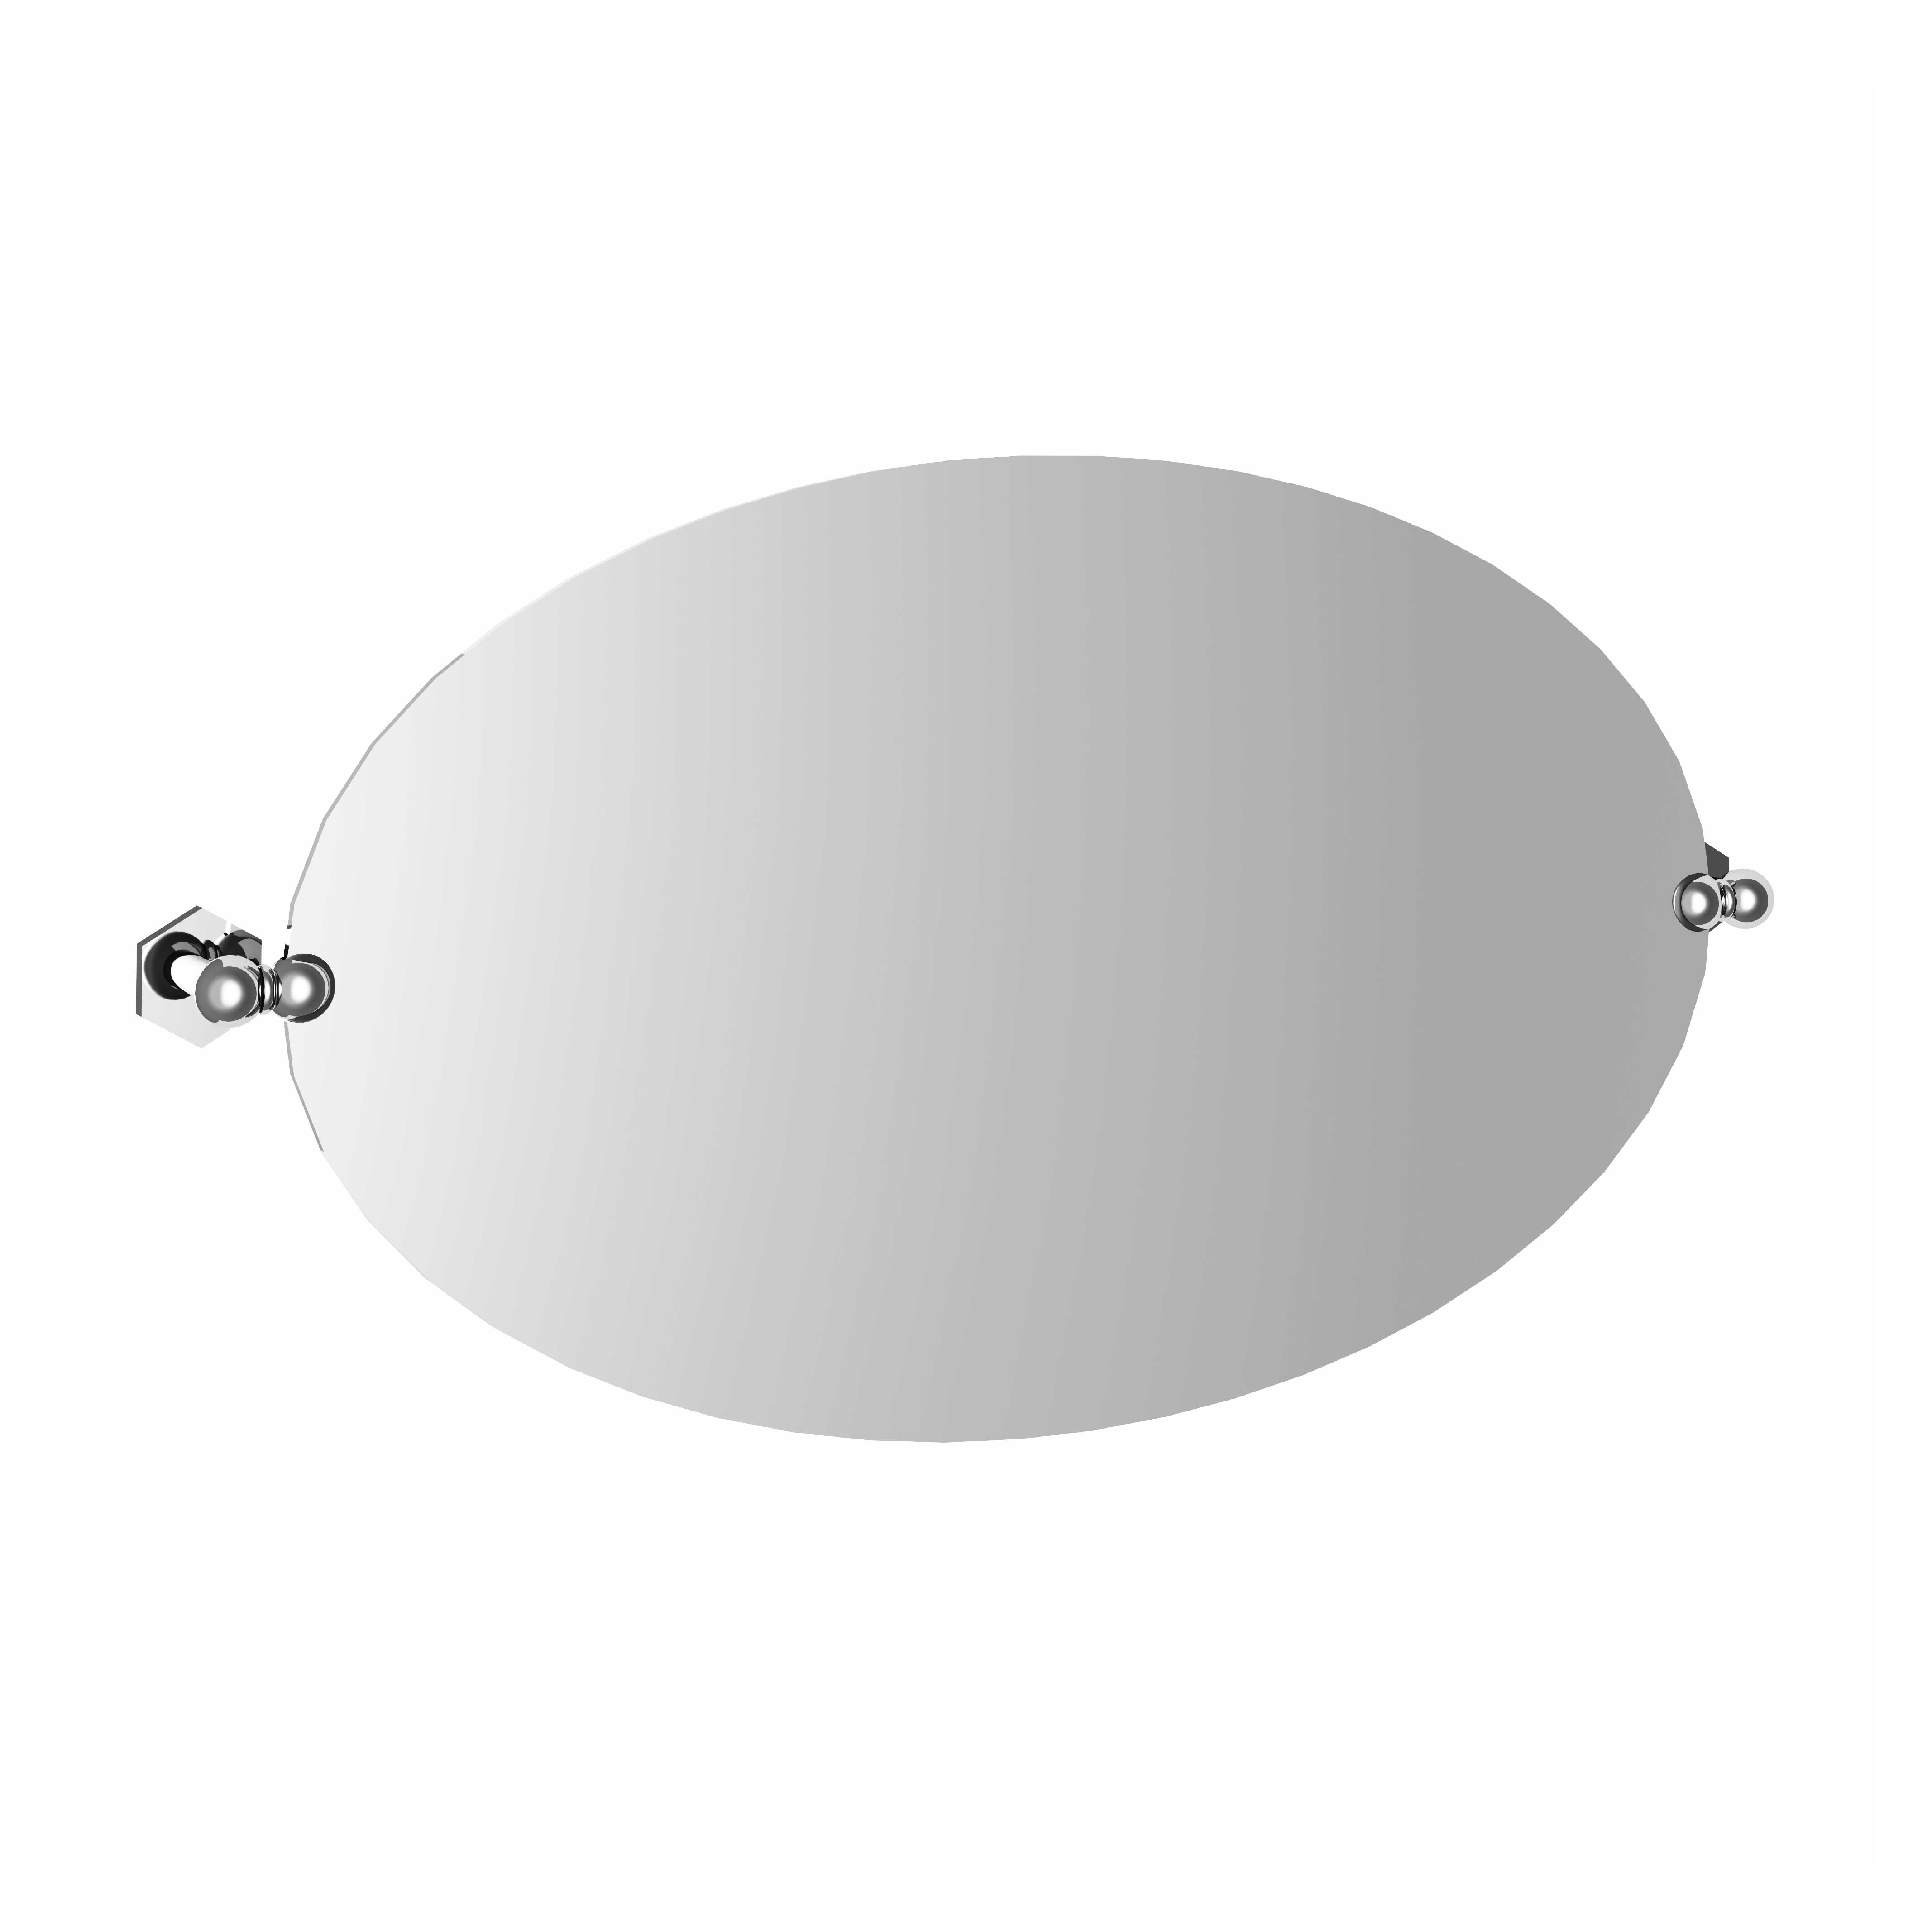 M32-537 Oval mirror